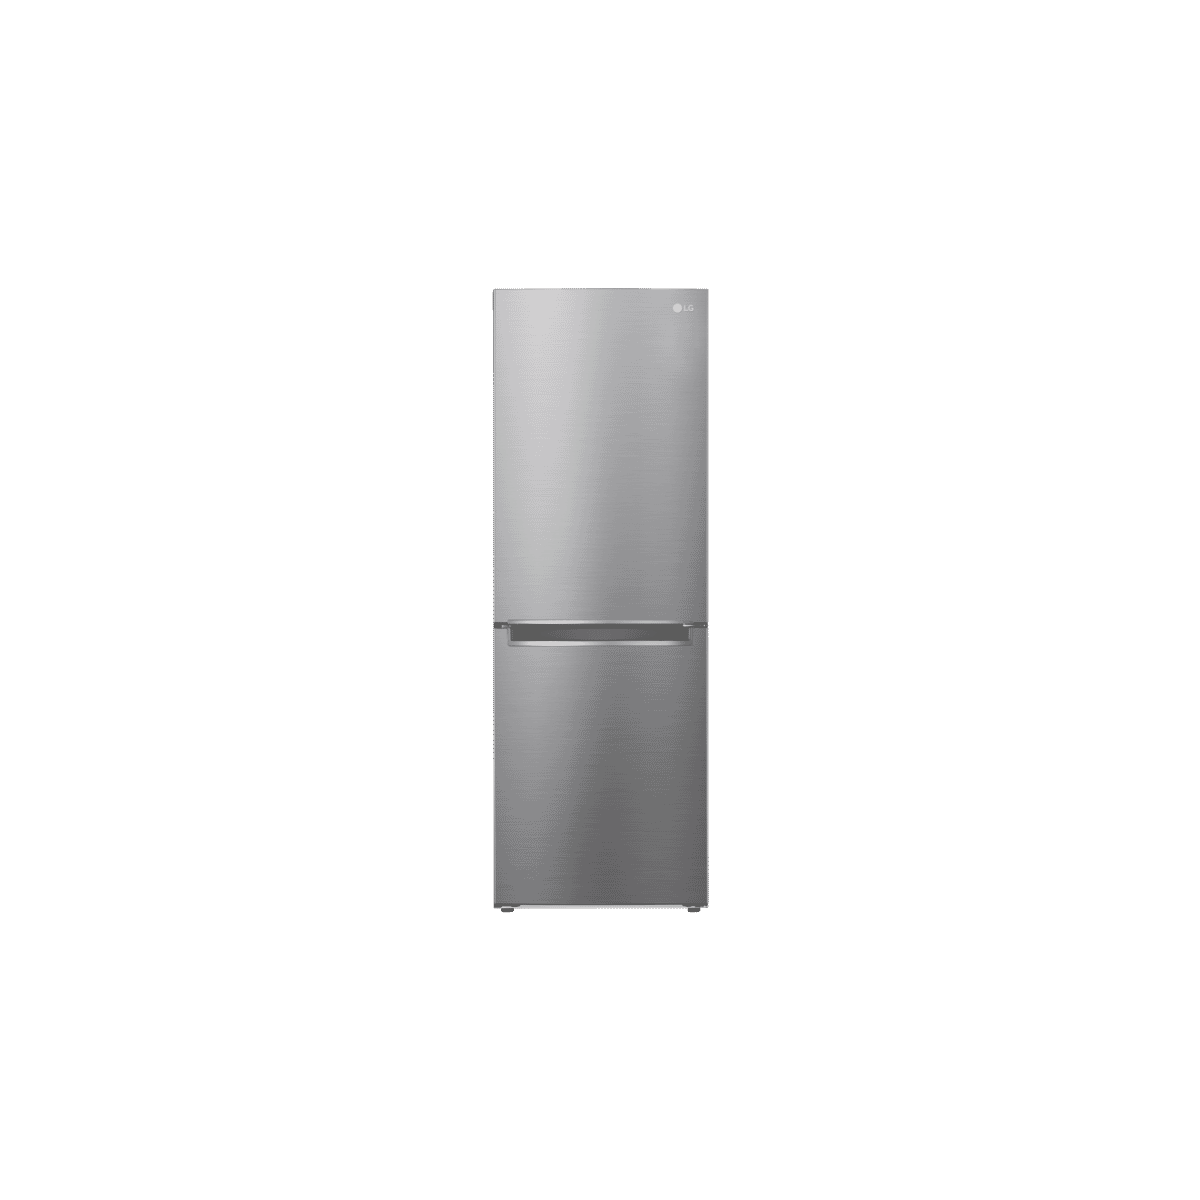 LG GB-335PL 306L Bottom Mount Refrigerator at The Good Guys